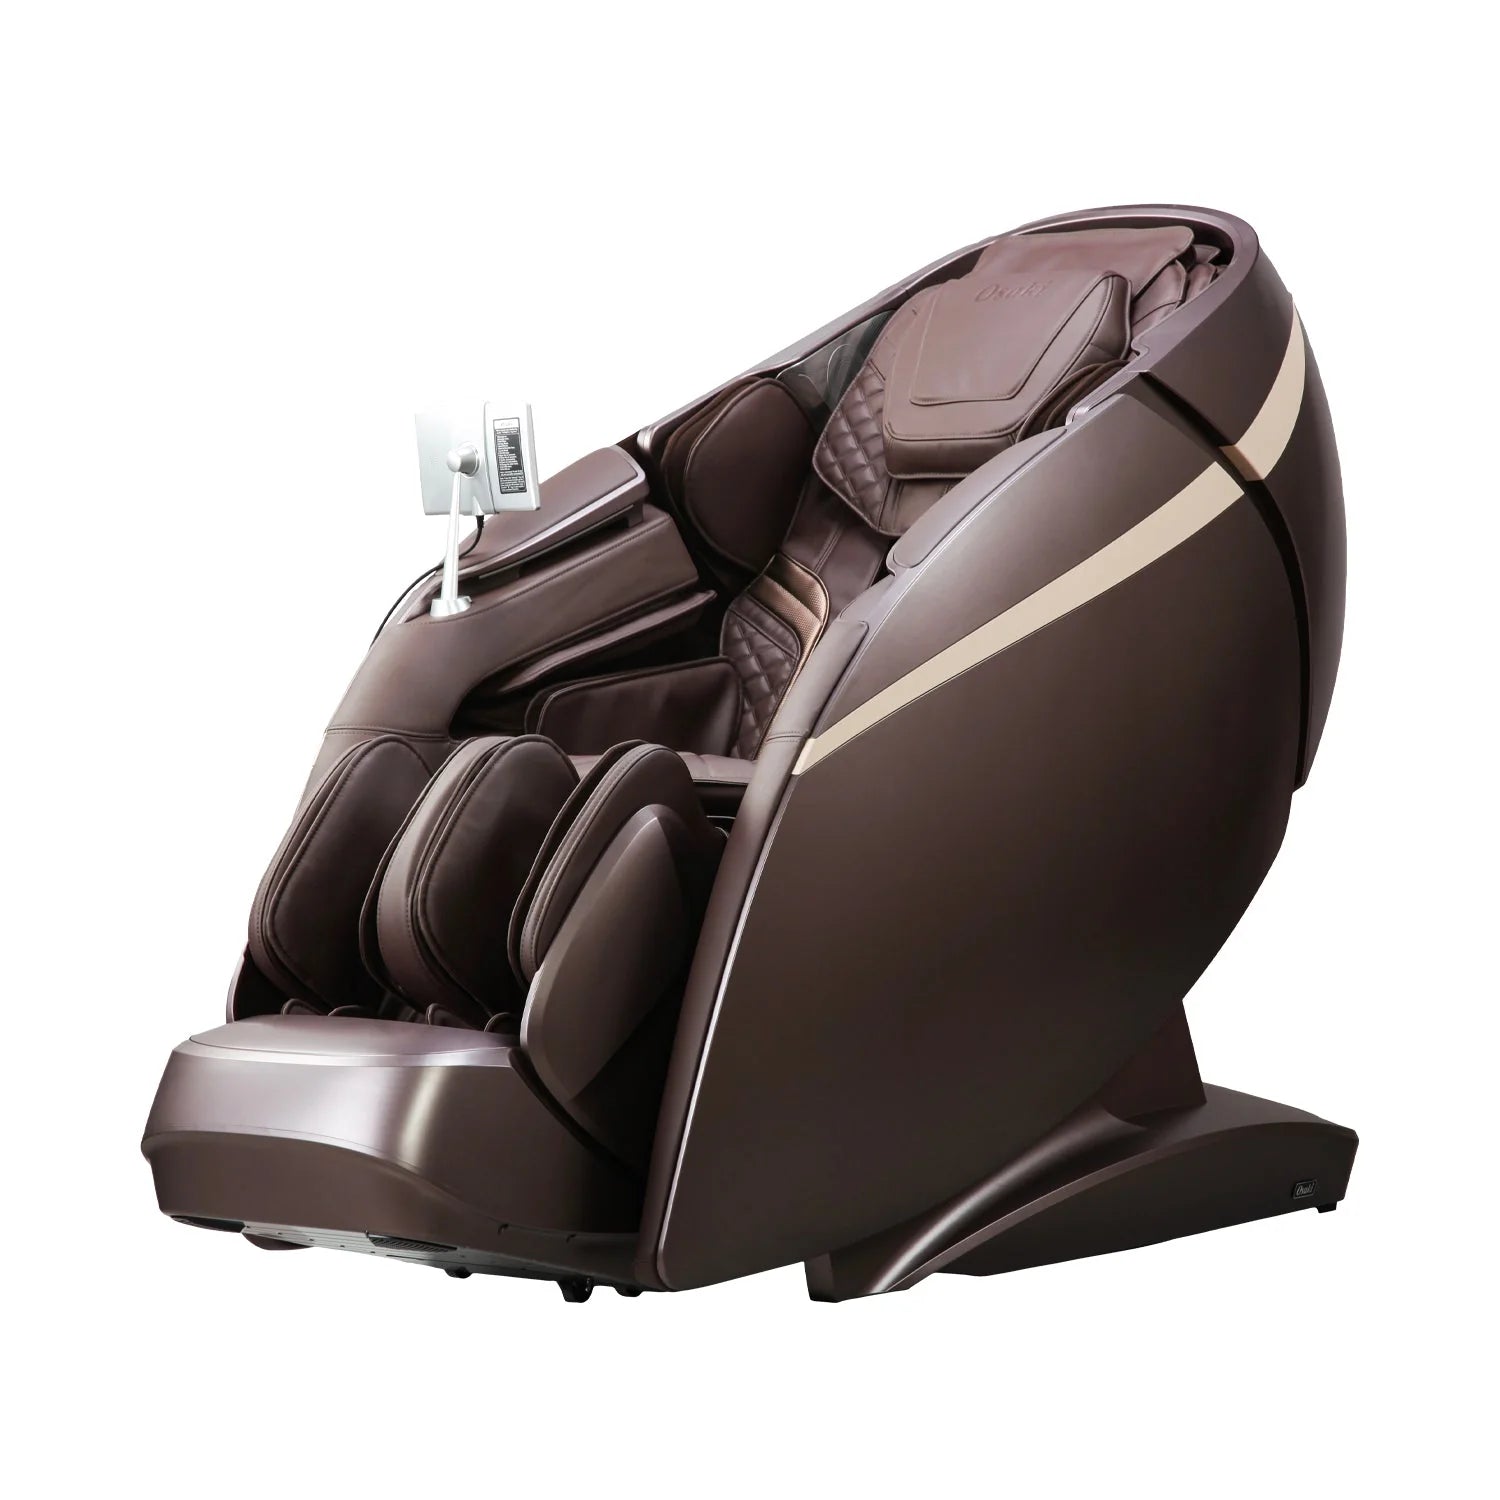 Osaki OS-Pro 4D+ DuoMax Massage Chair